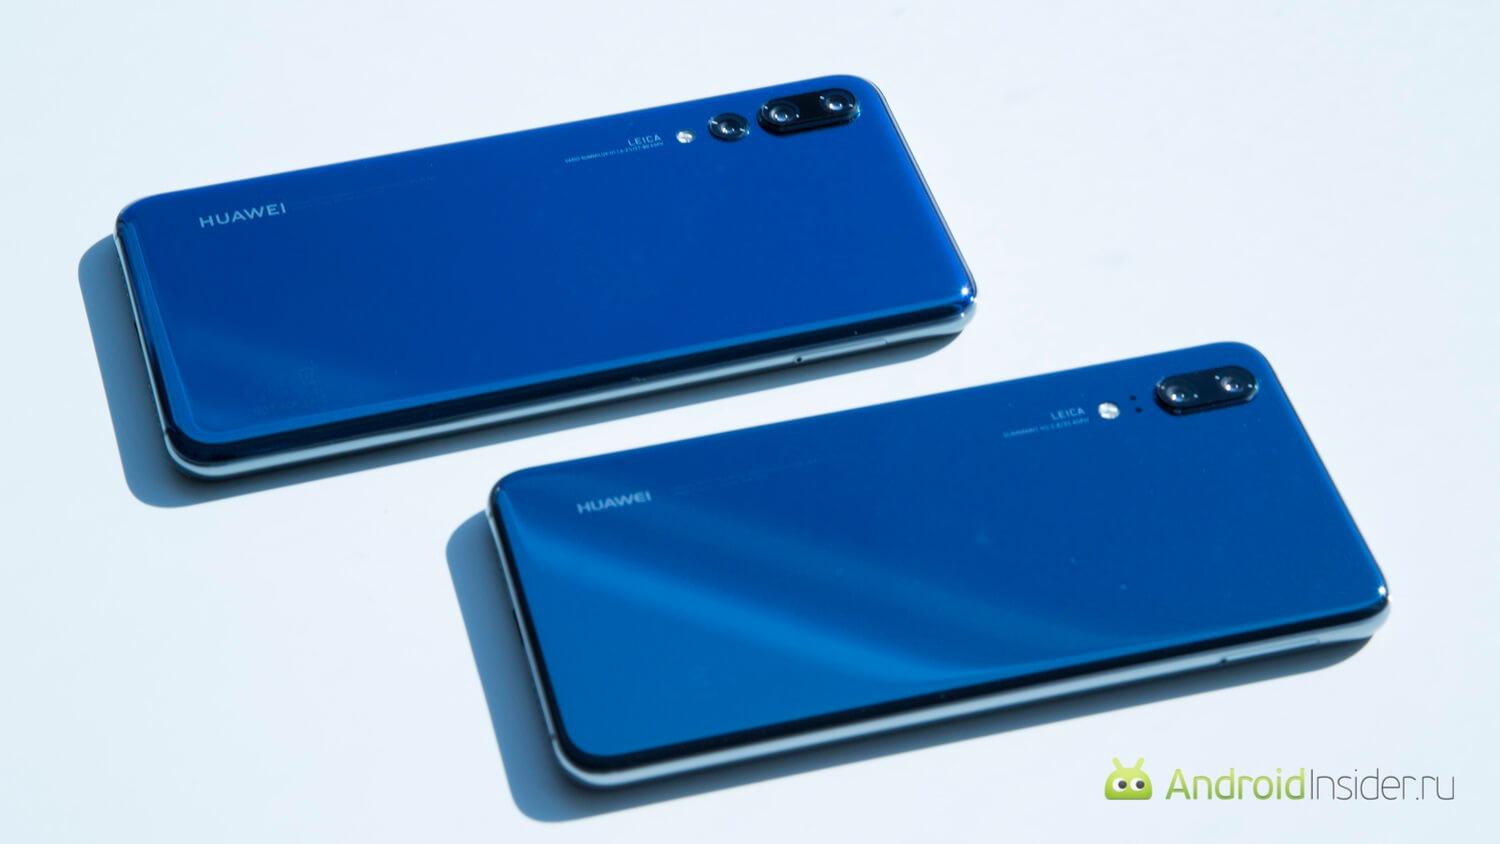 Новости Android #156: блокировка сервисов Google и новинки Huawei. Huawei представила свои новые смартфоны P20 и P20 Pro. Фото.